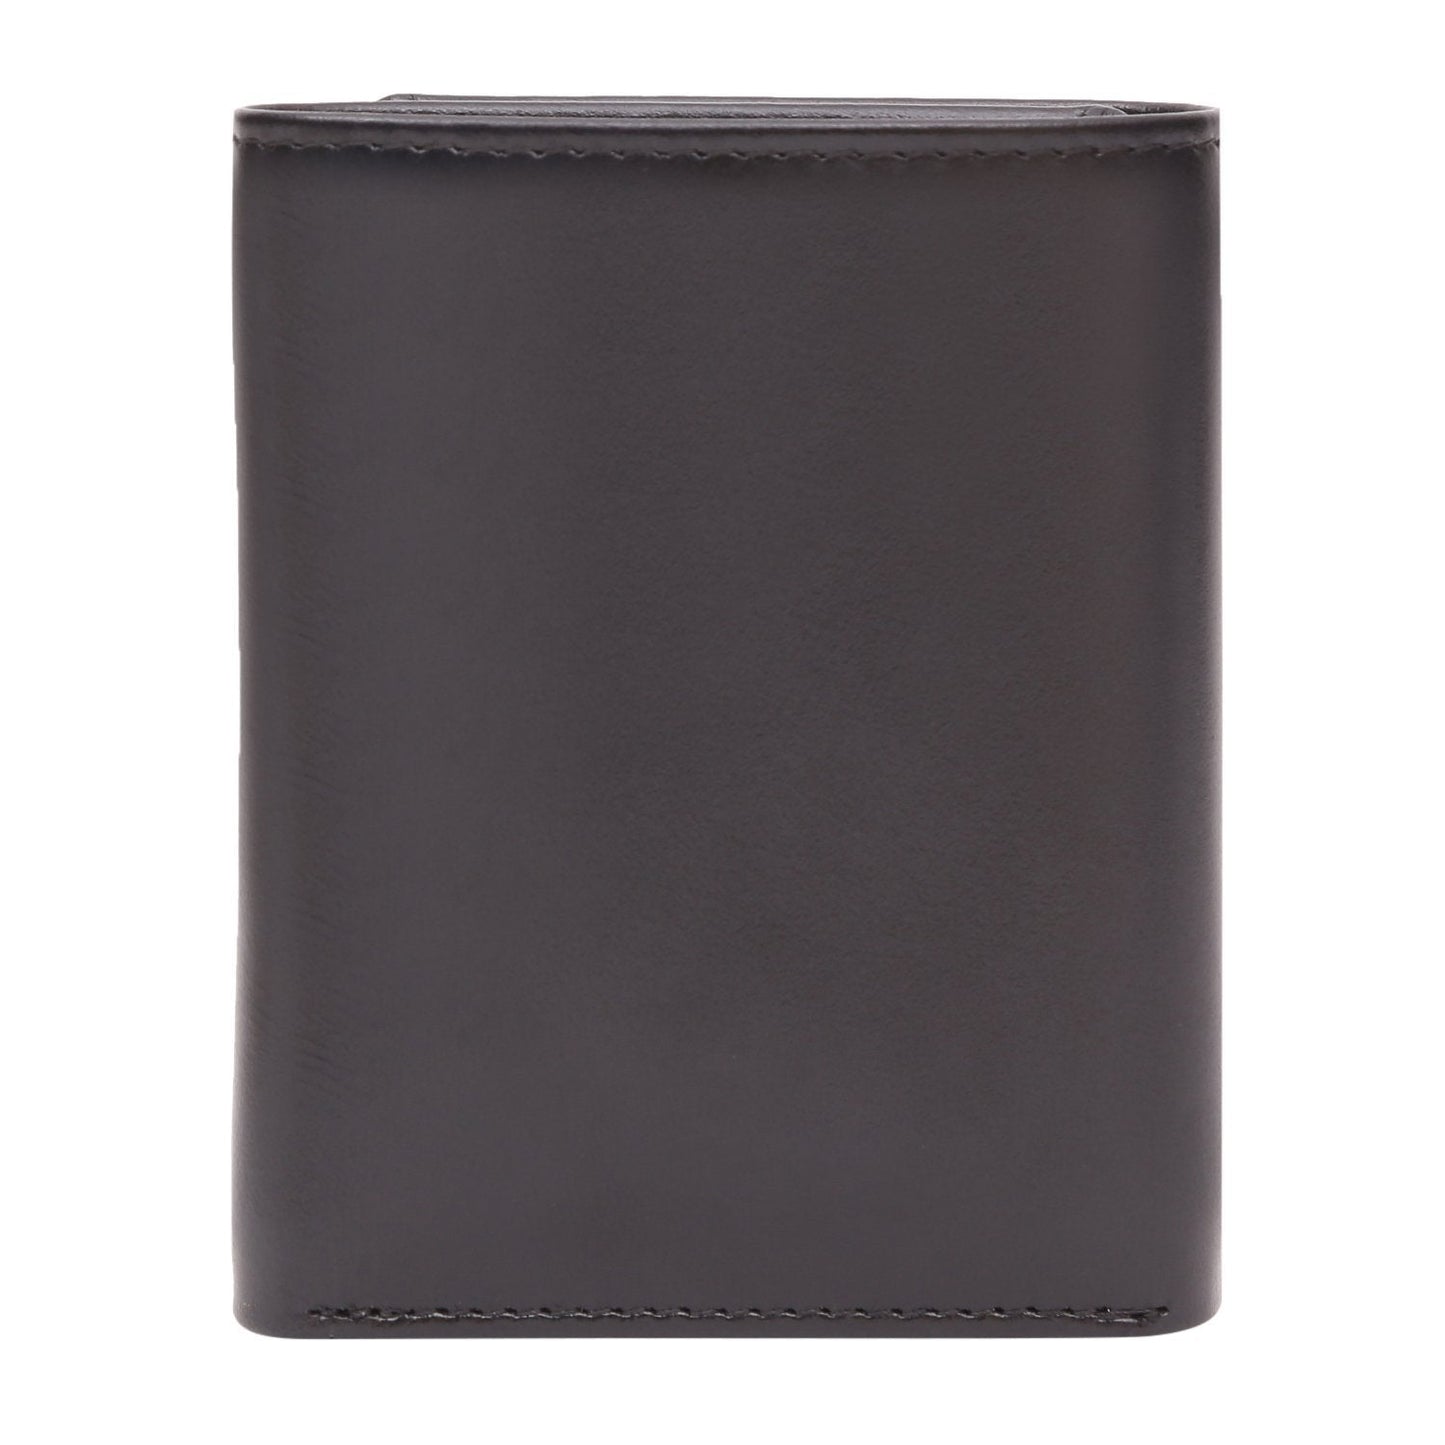 Black Colour Tri-Fold Italian Leather Slim Wallet (6 Card Slot +2 Hidden Compartment + 1 ID Slot + Cash Compartment) Cathy London 